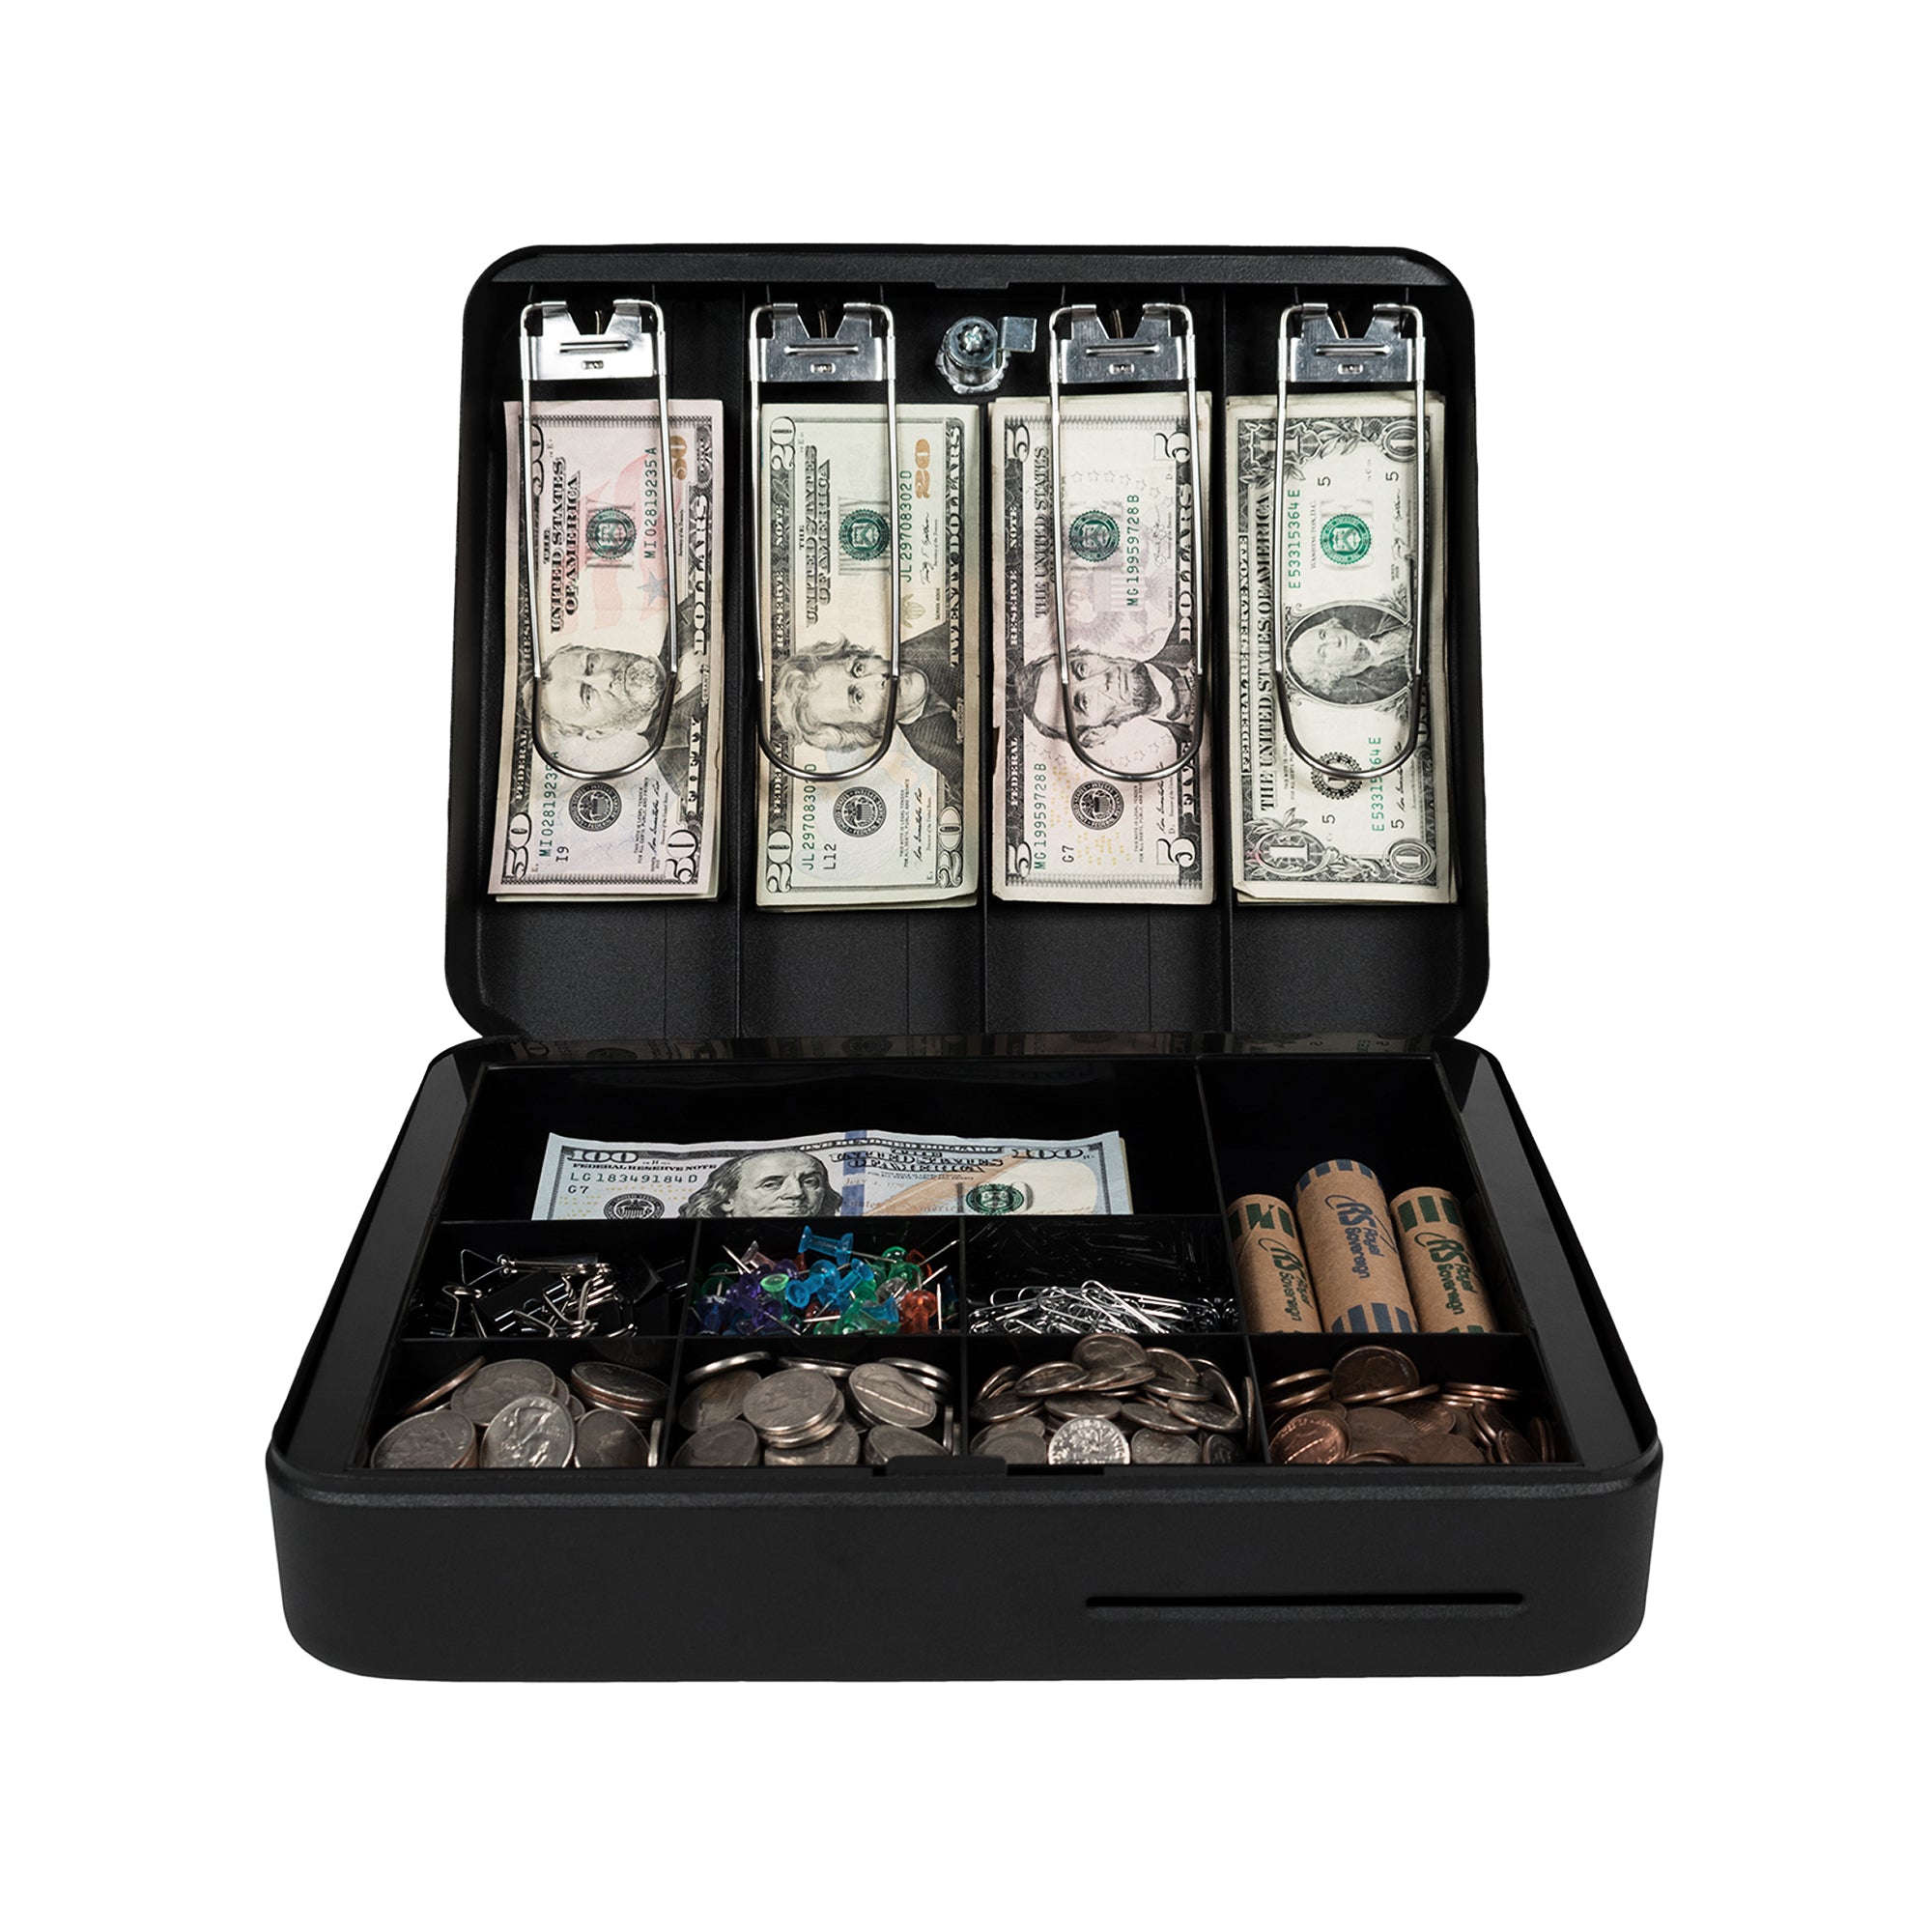 RSCB-300, Deluxe Cash Box, Safety Deposit Slot